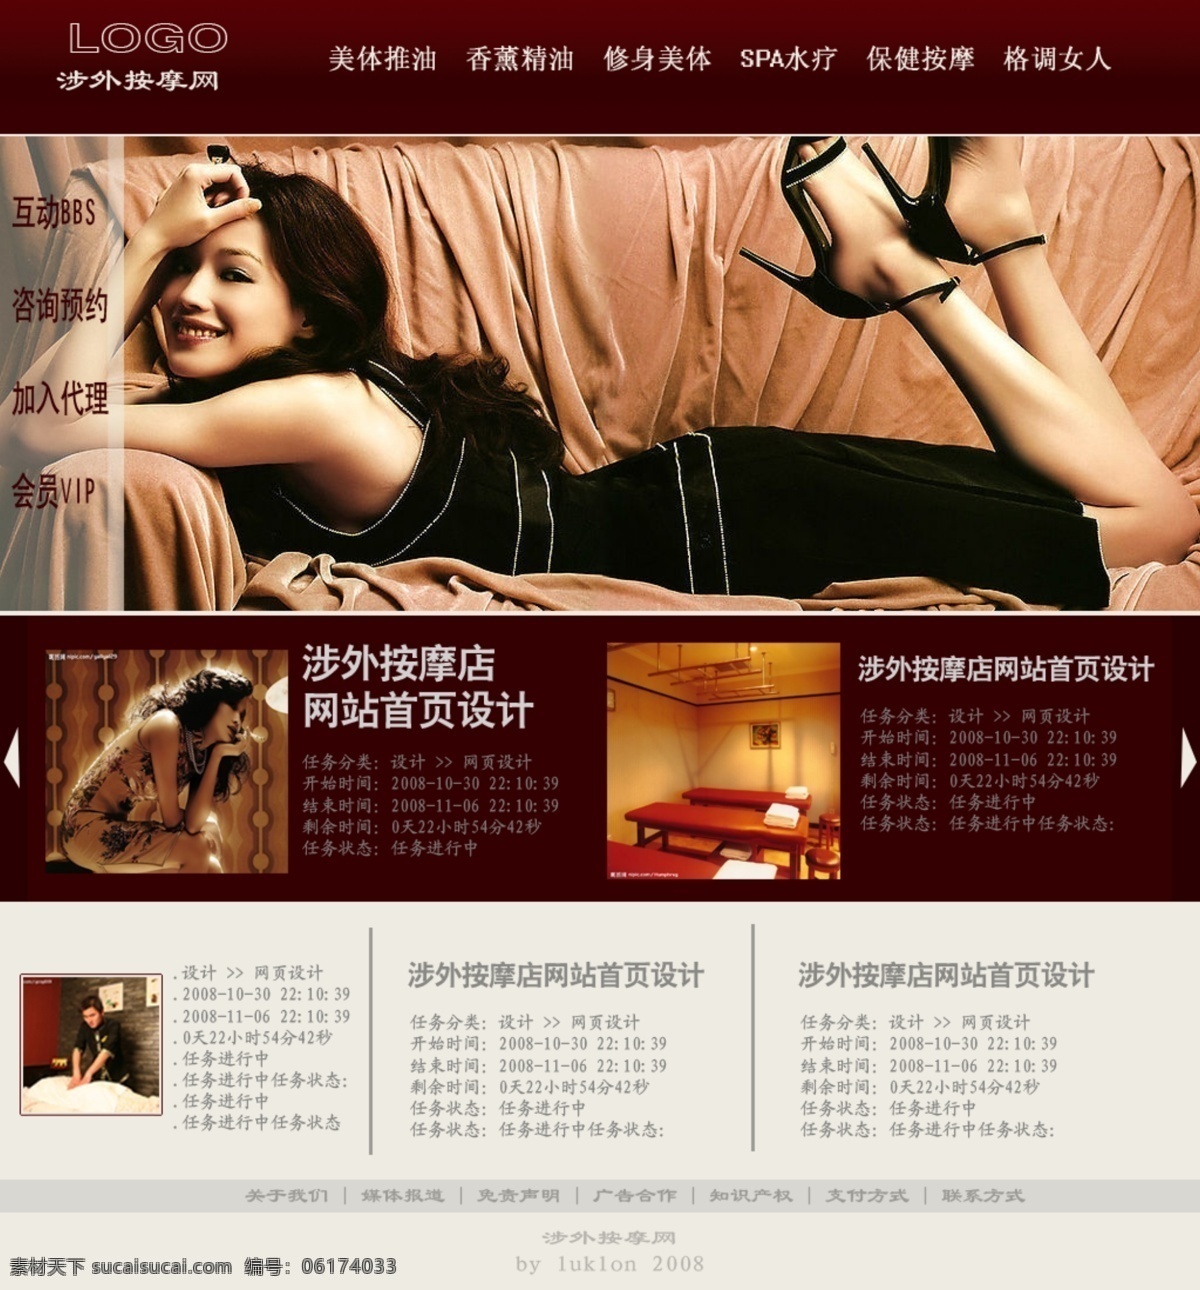 spa 按摩 网页模板 美女 性感 中国风格 网页素材